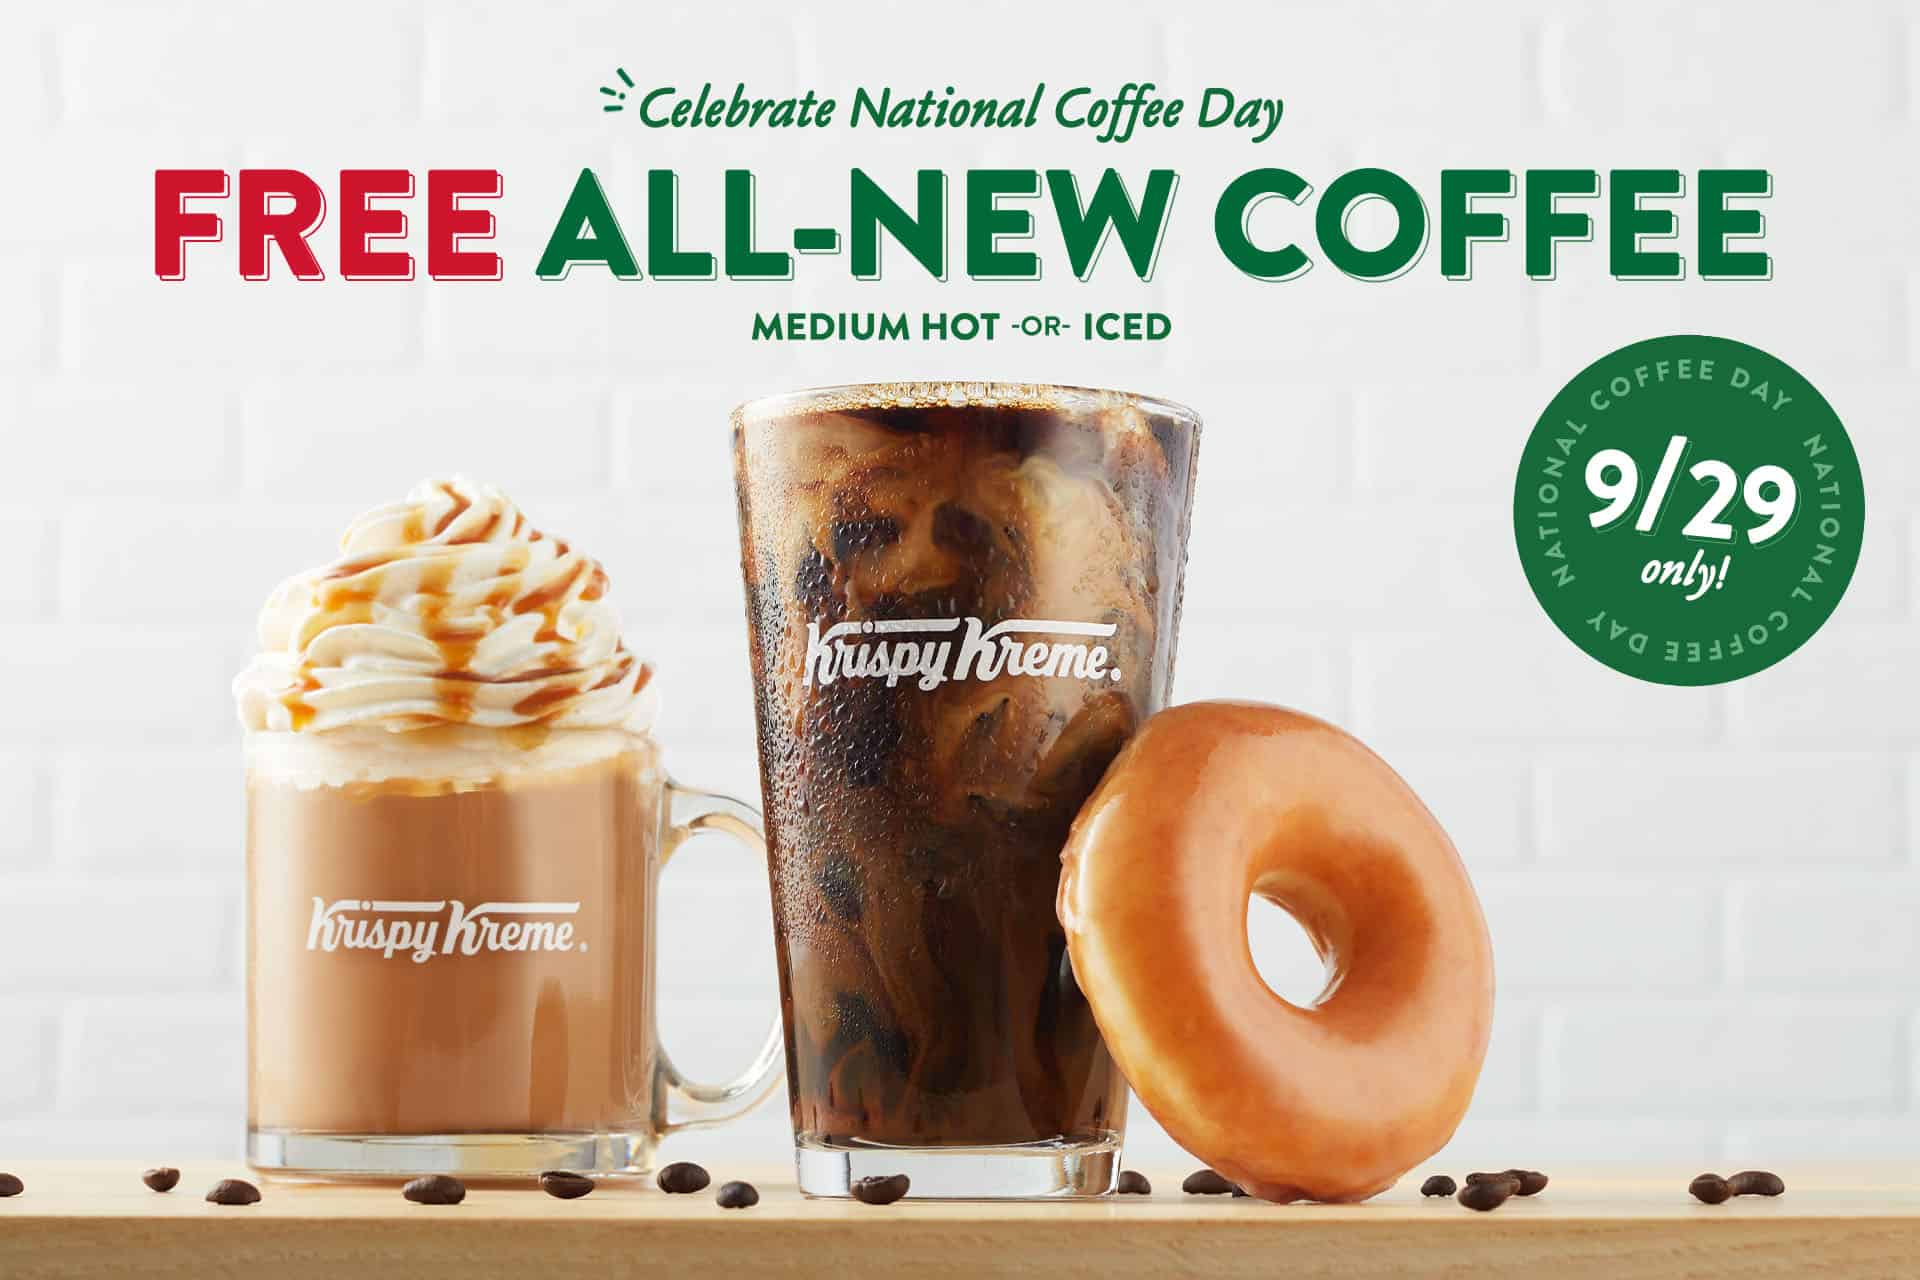 Enjoy free coffee and 2 dozen doughnuts at Krispy Kreme on National